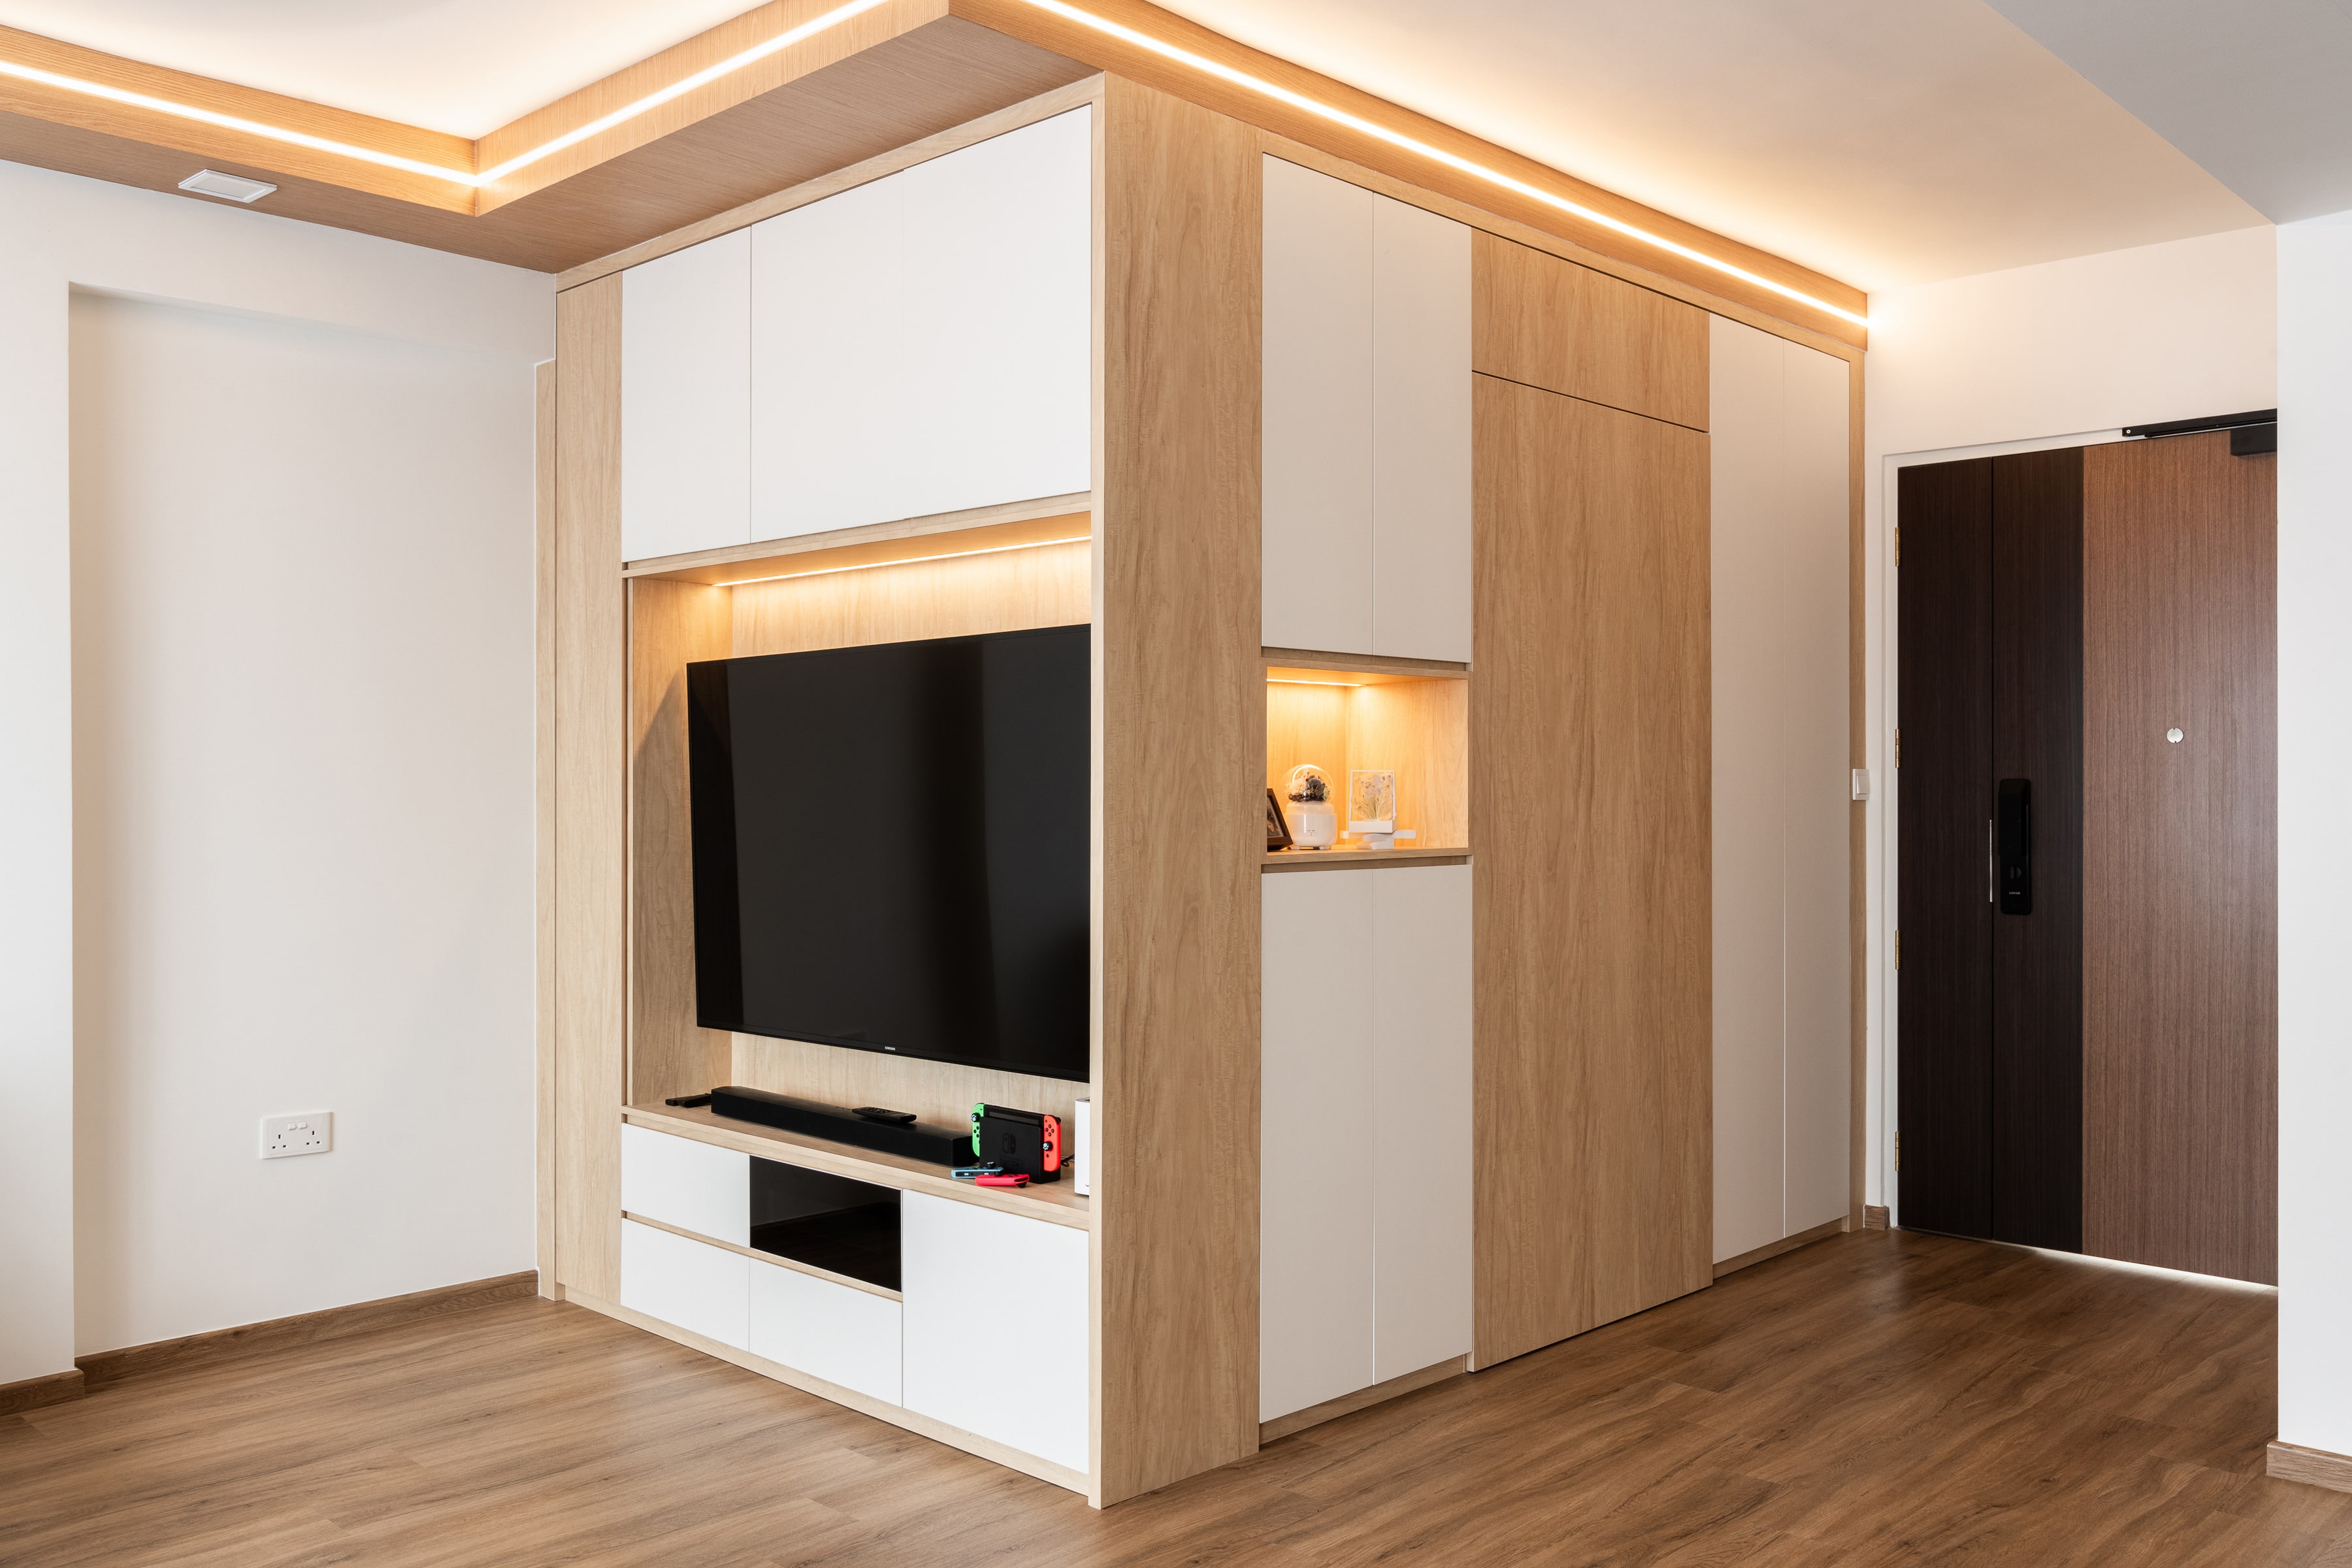 Scandinavian Design - Living Room - HDB 4 Room - Design by Design 4 Space Pte Ltd